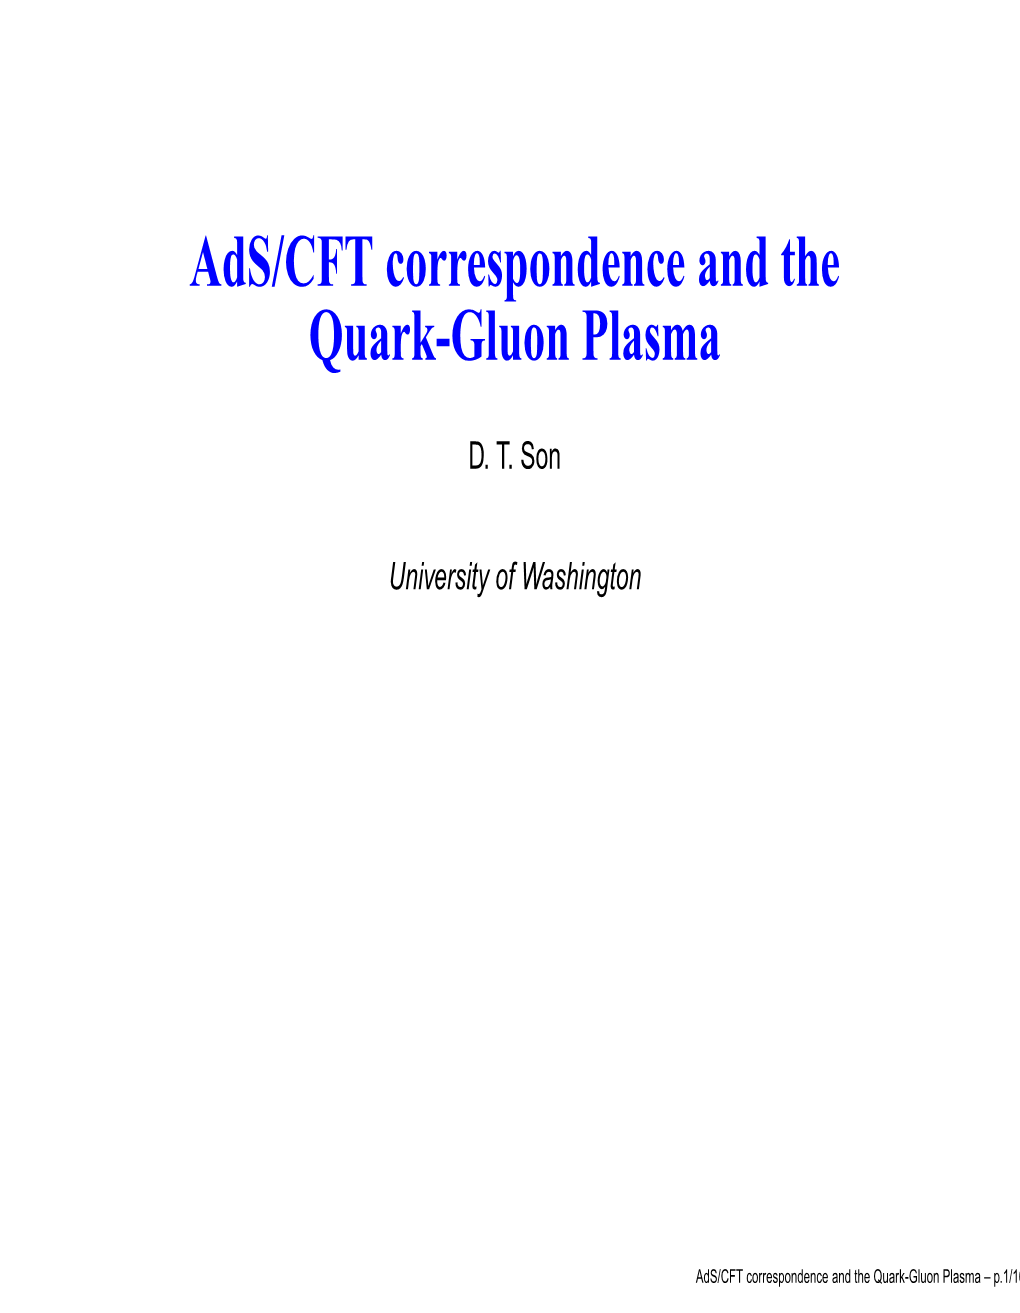 Ads/CFT Correspondence and the Quark-Gluon Plasma